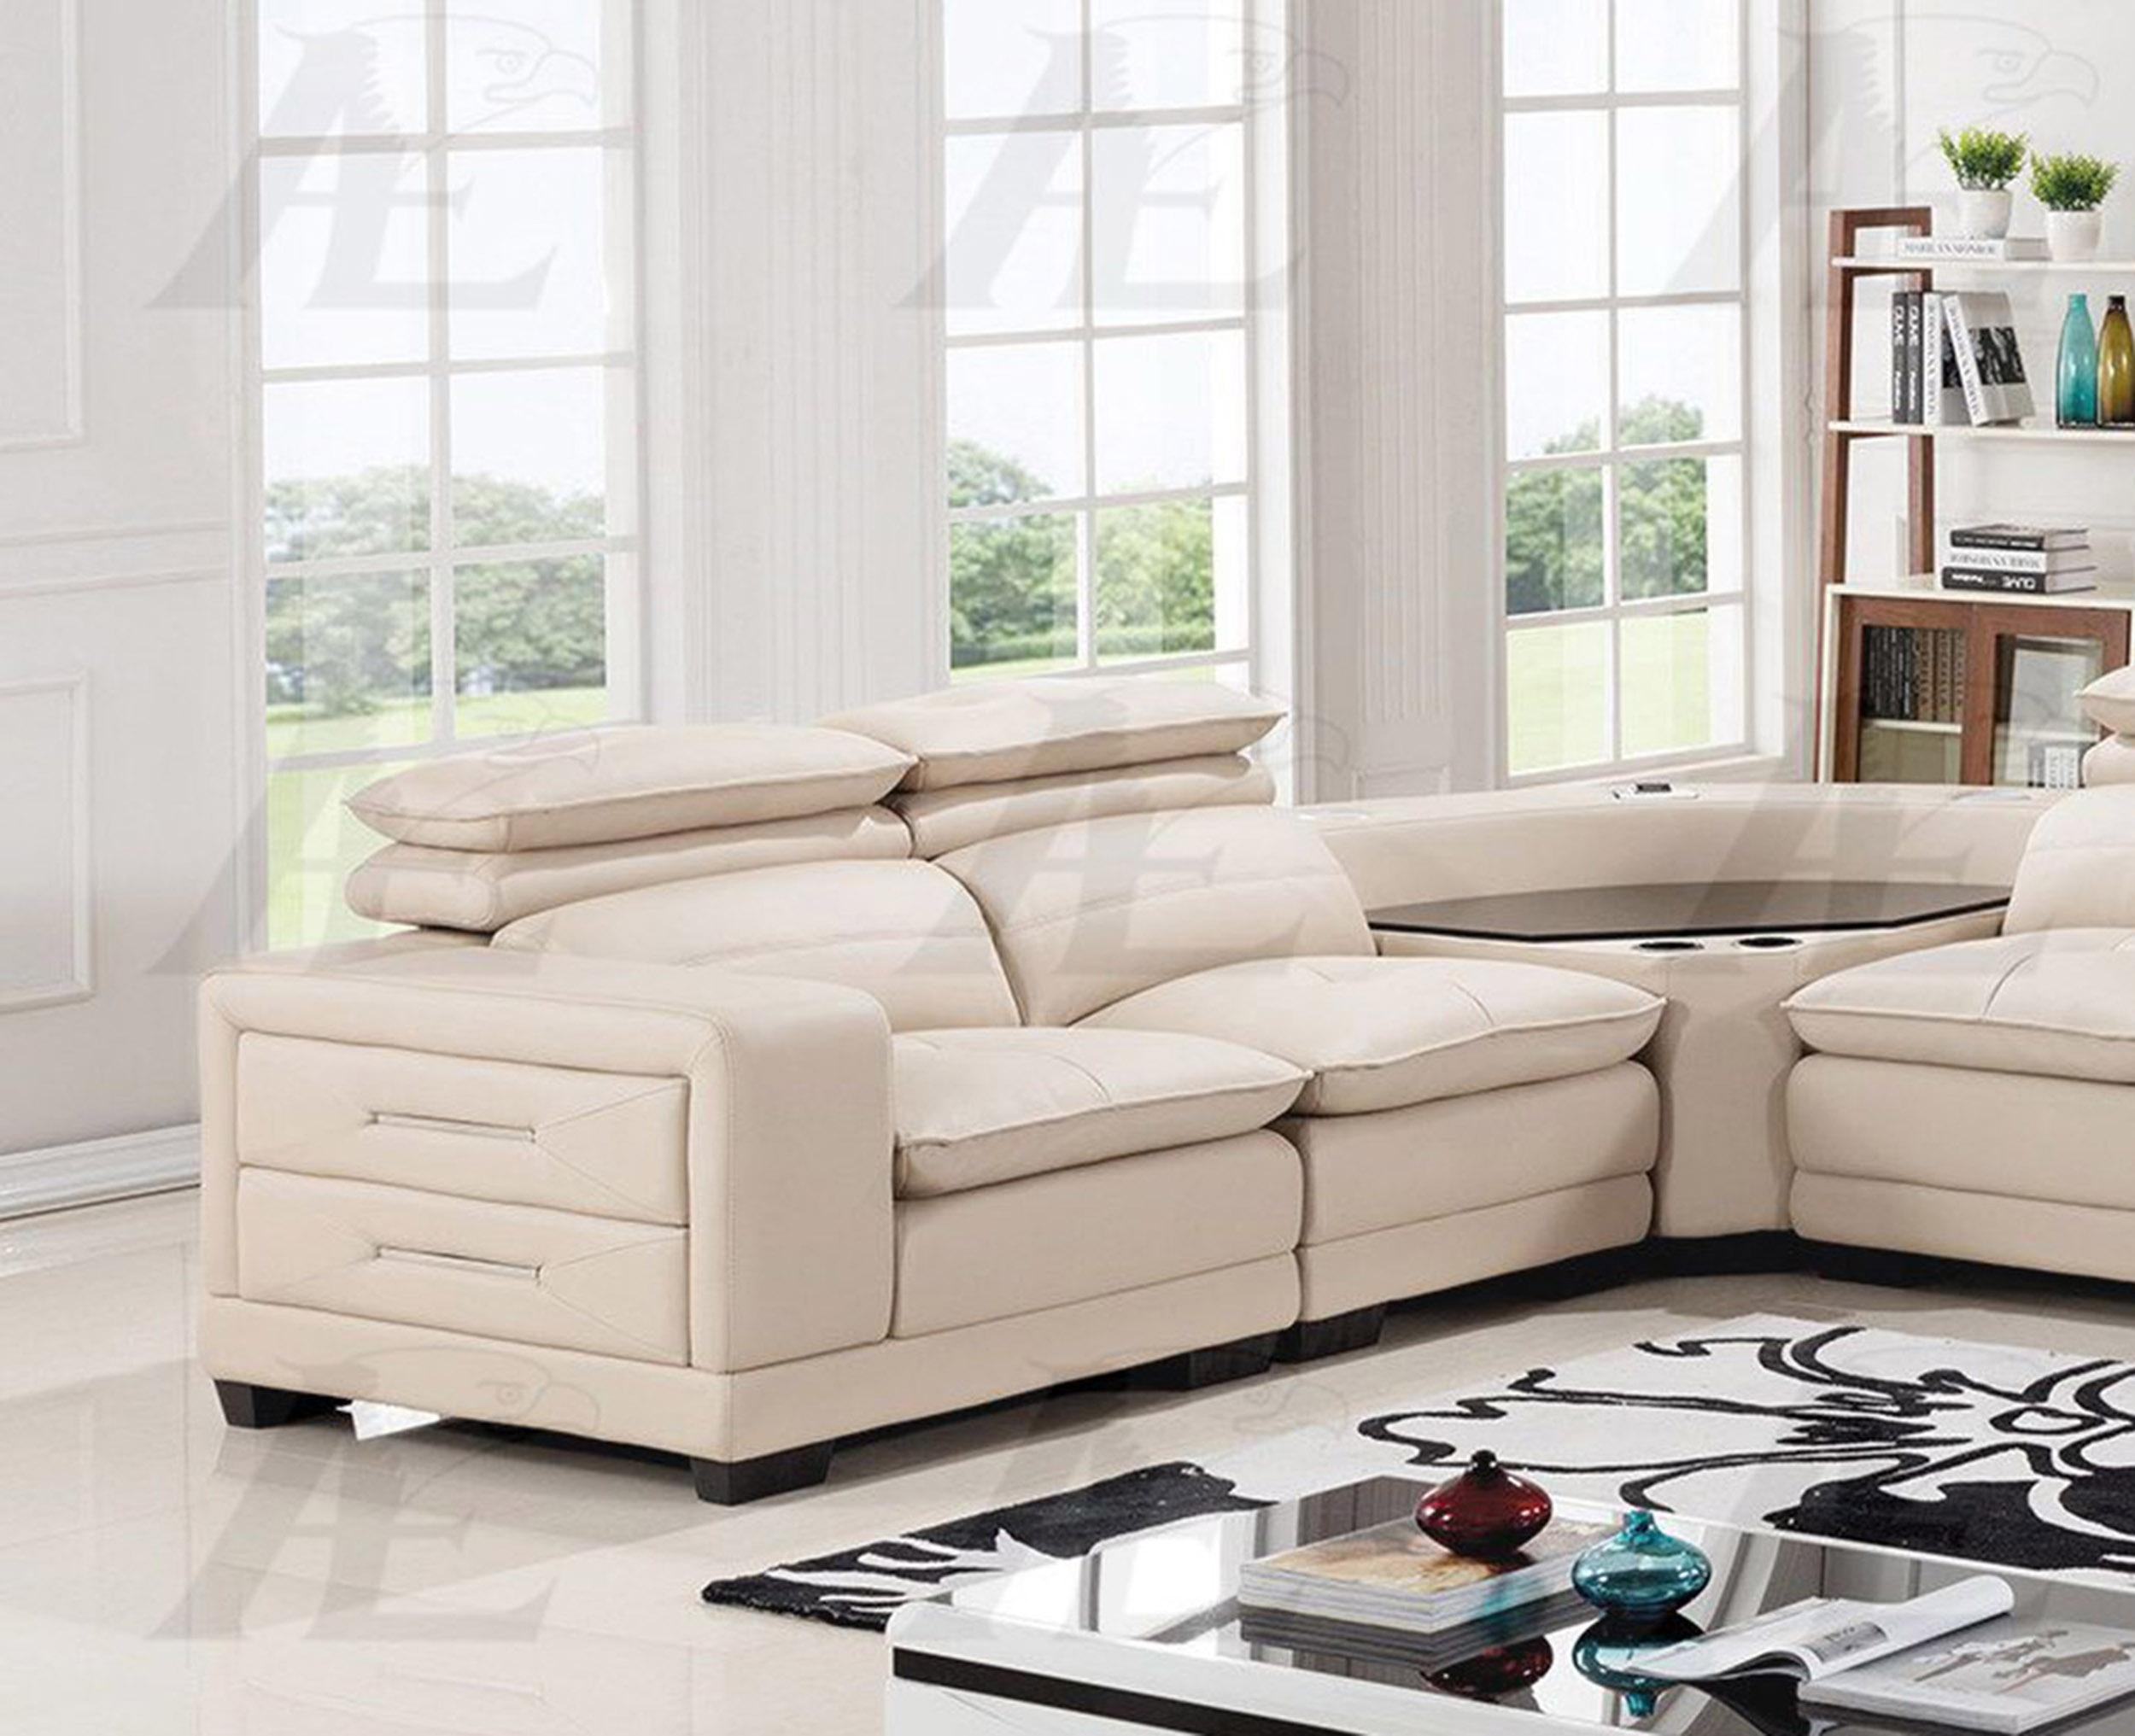 

                    
American Eagle Furniture AE-L688M-LG Sectional Sofa Set Light Gray Microfiber Purchase 
